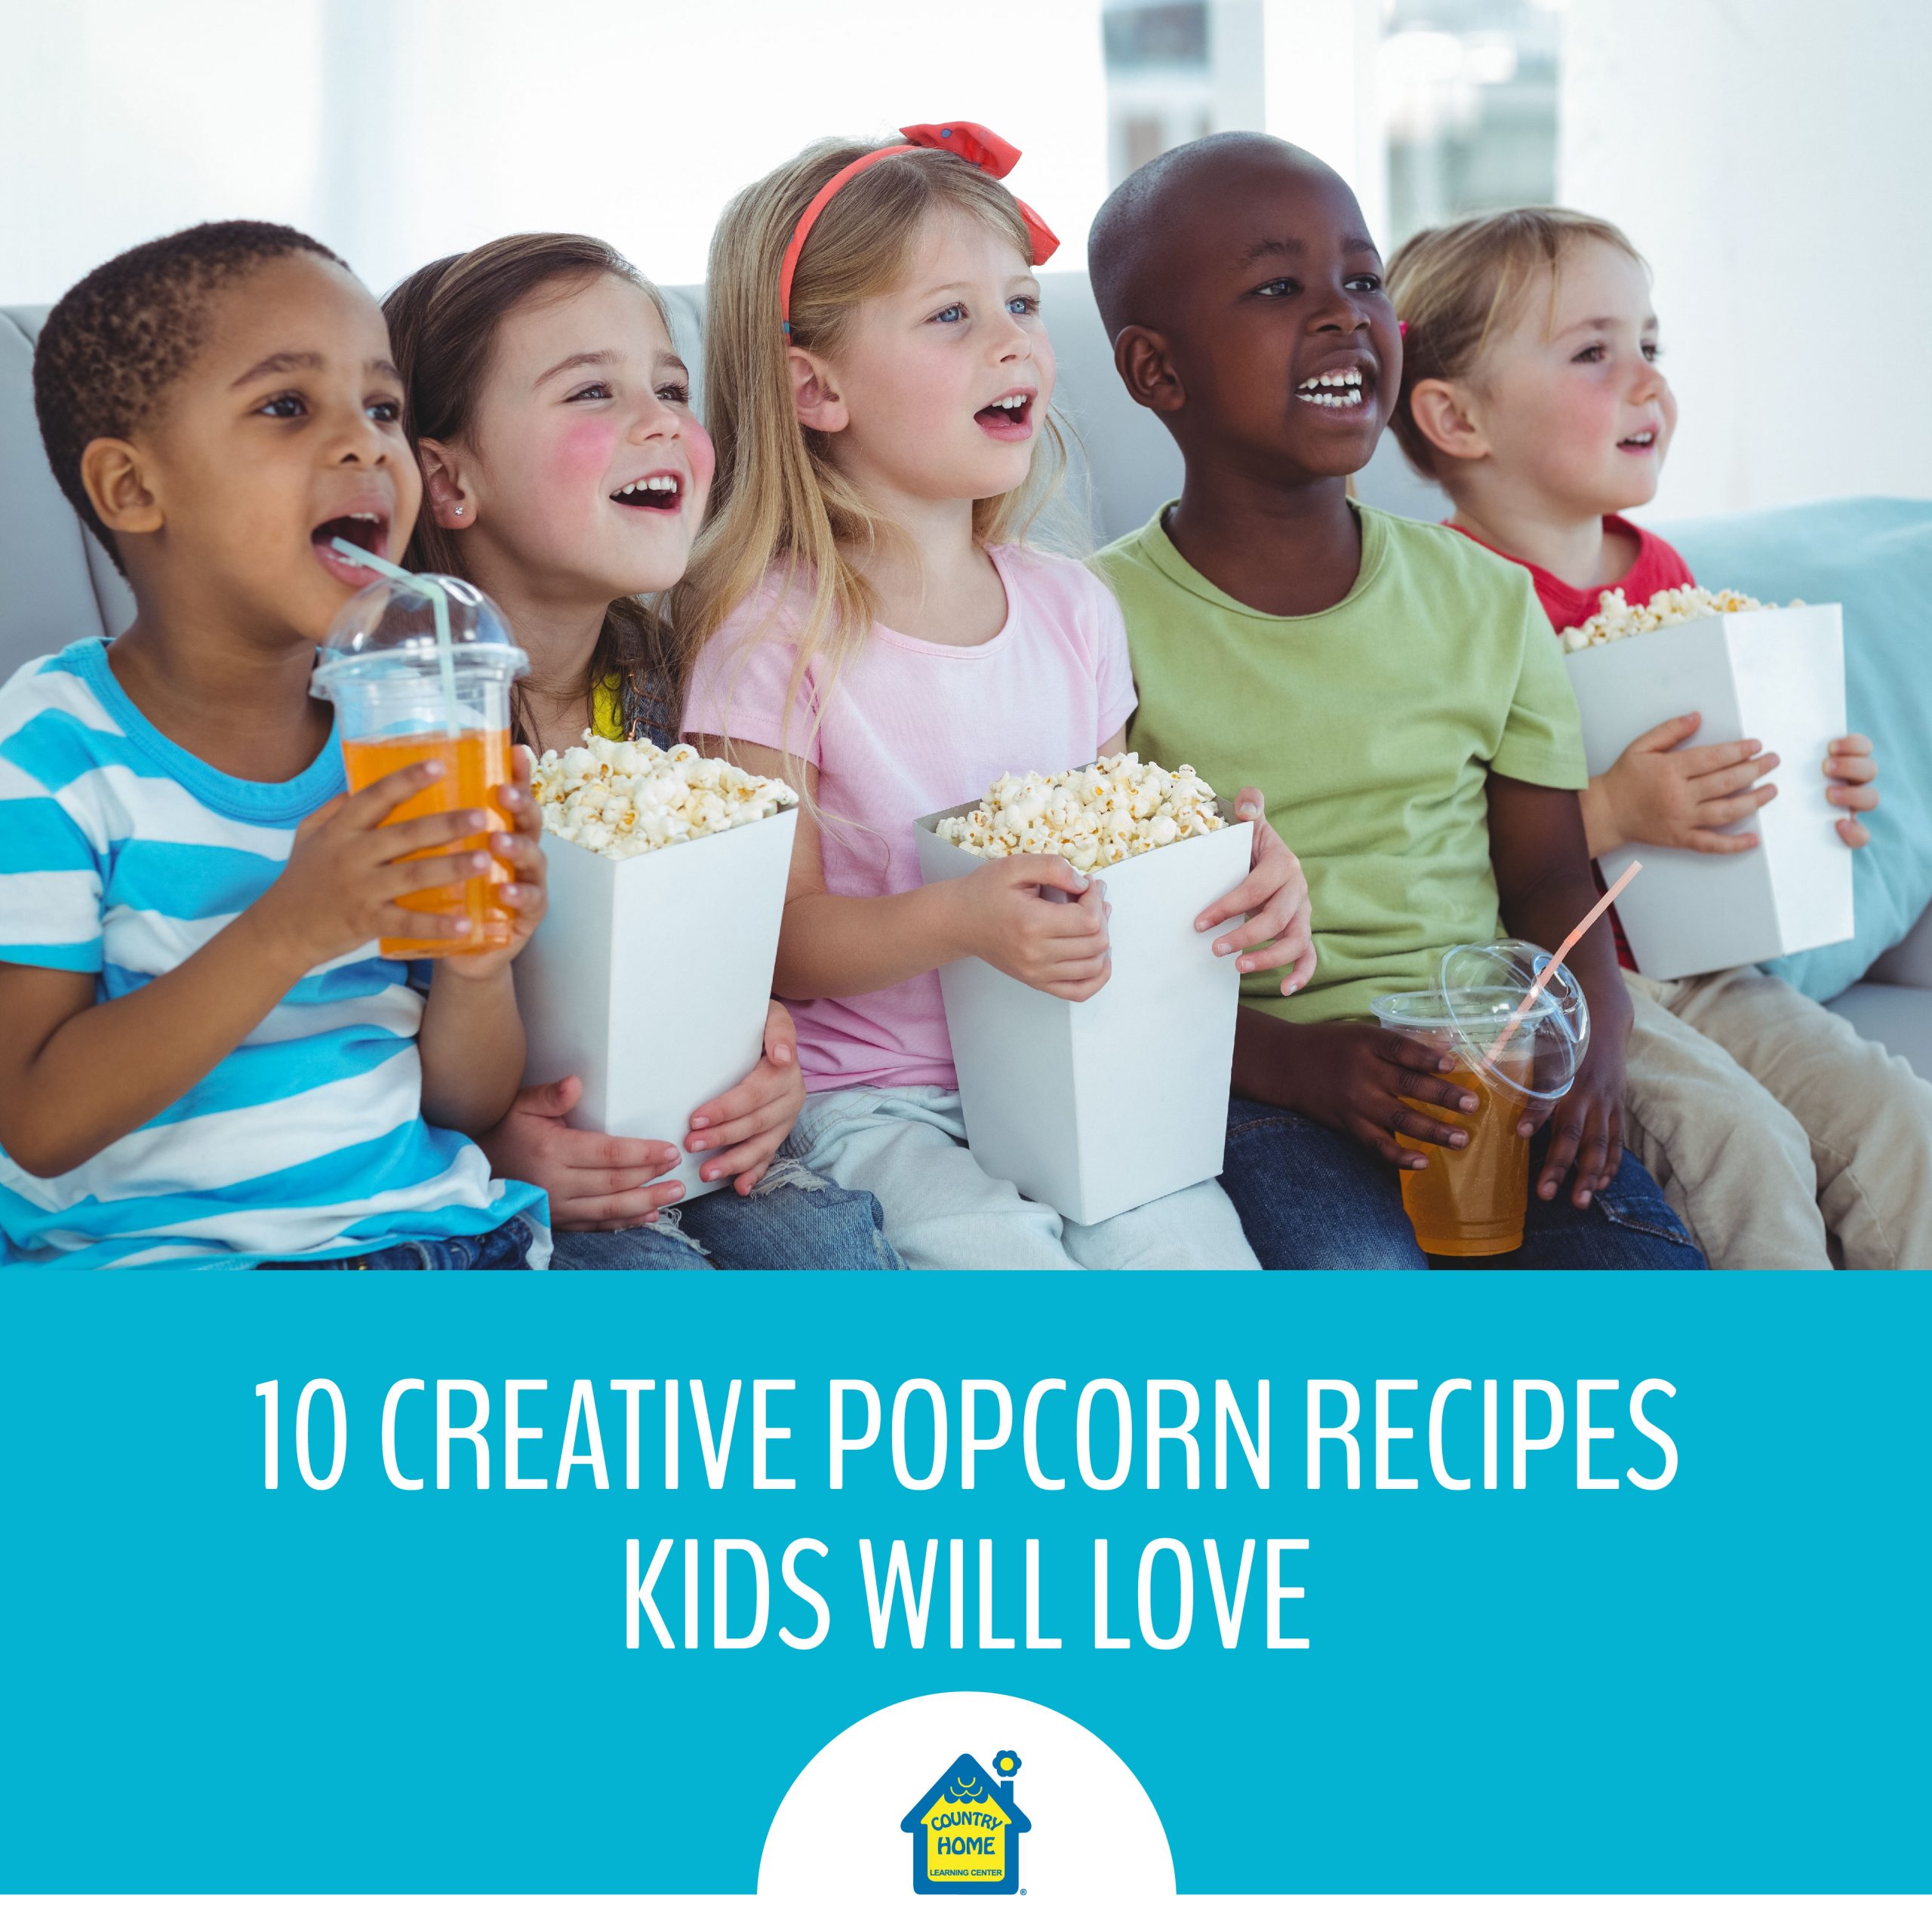 Popcorn Recipes for Kids